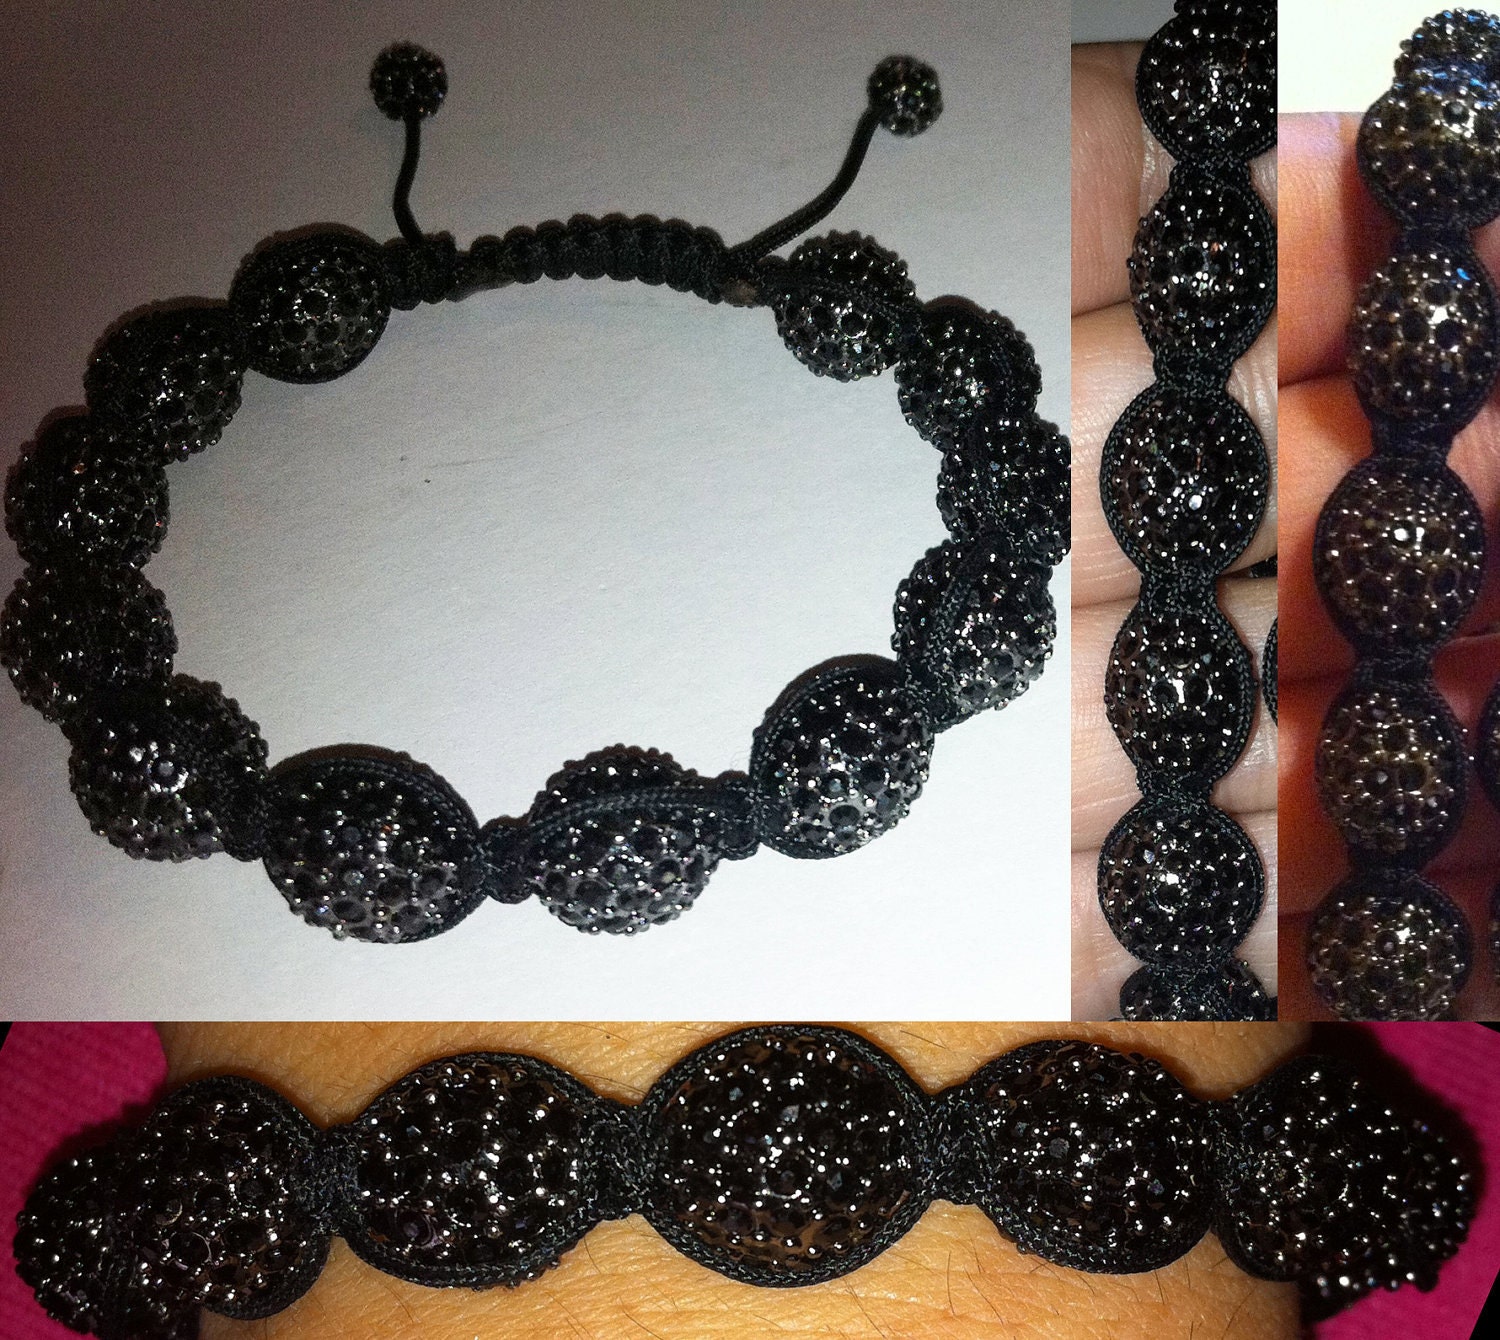 Black swarovski pave shamballa inspired bracelet with black string adjustable / jay z lil wayne style